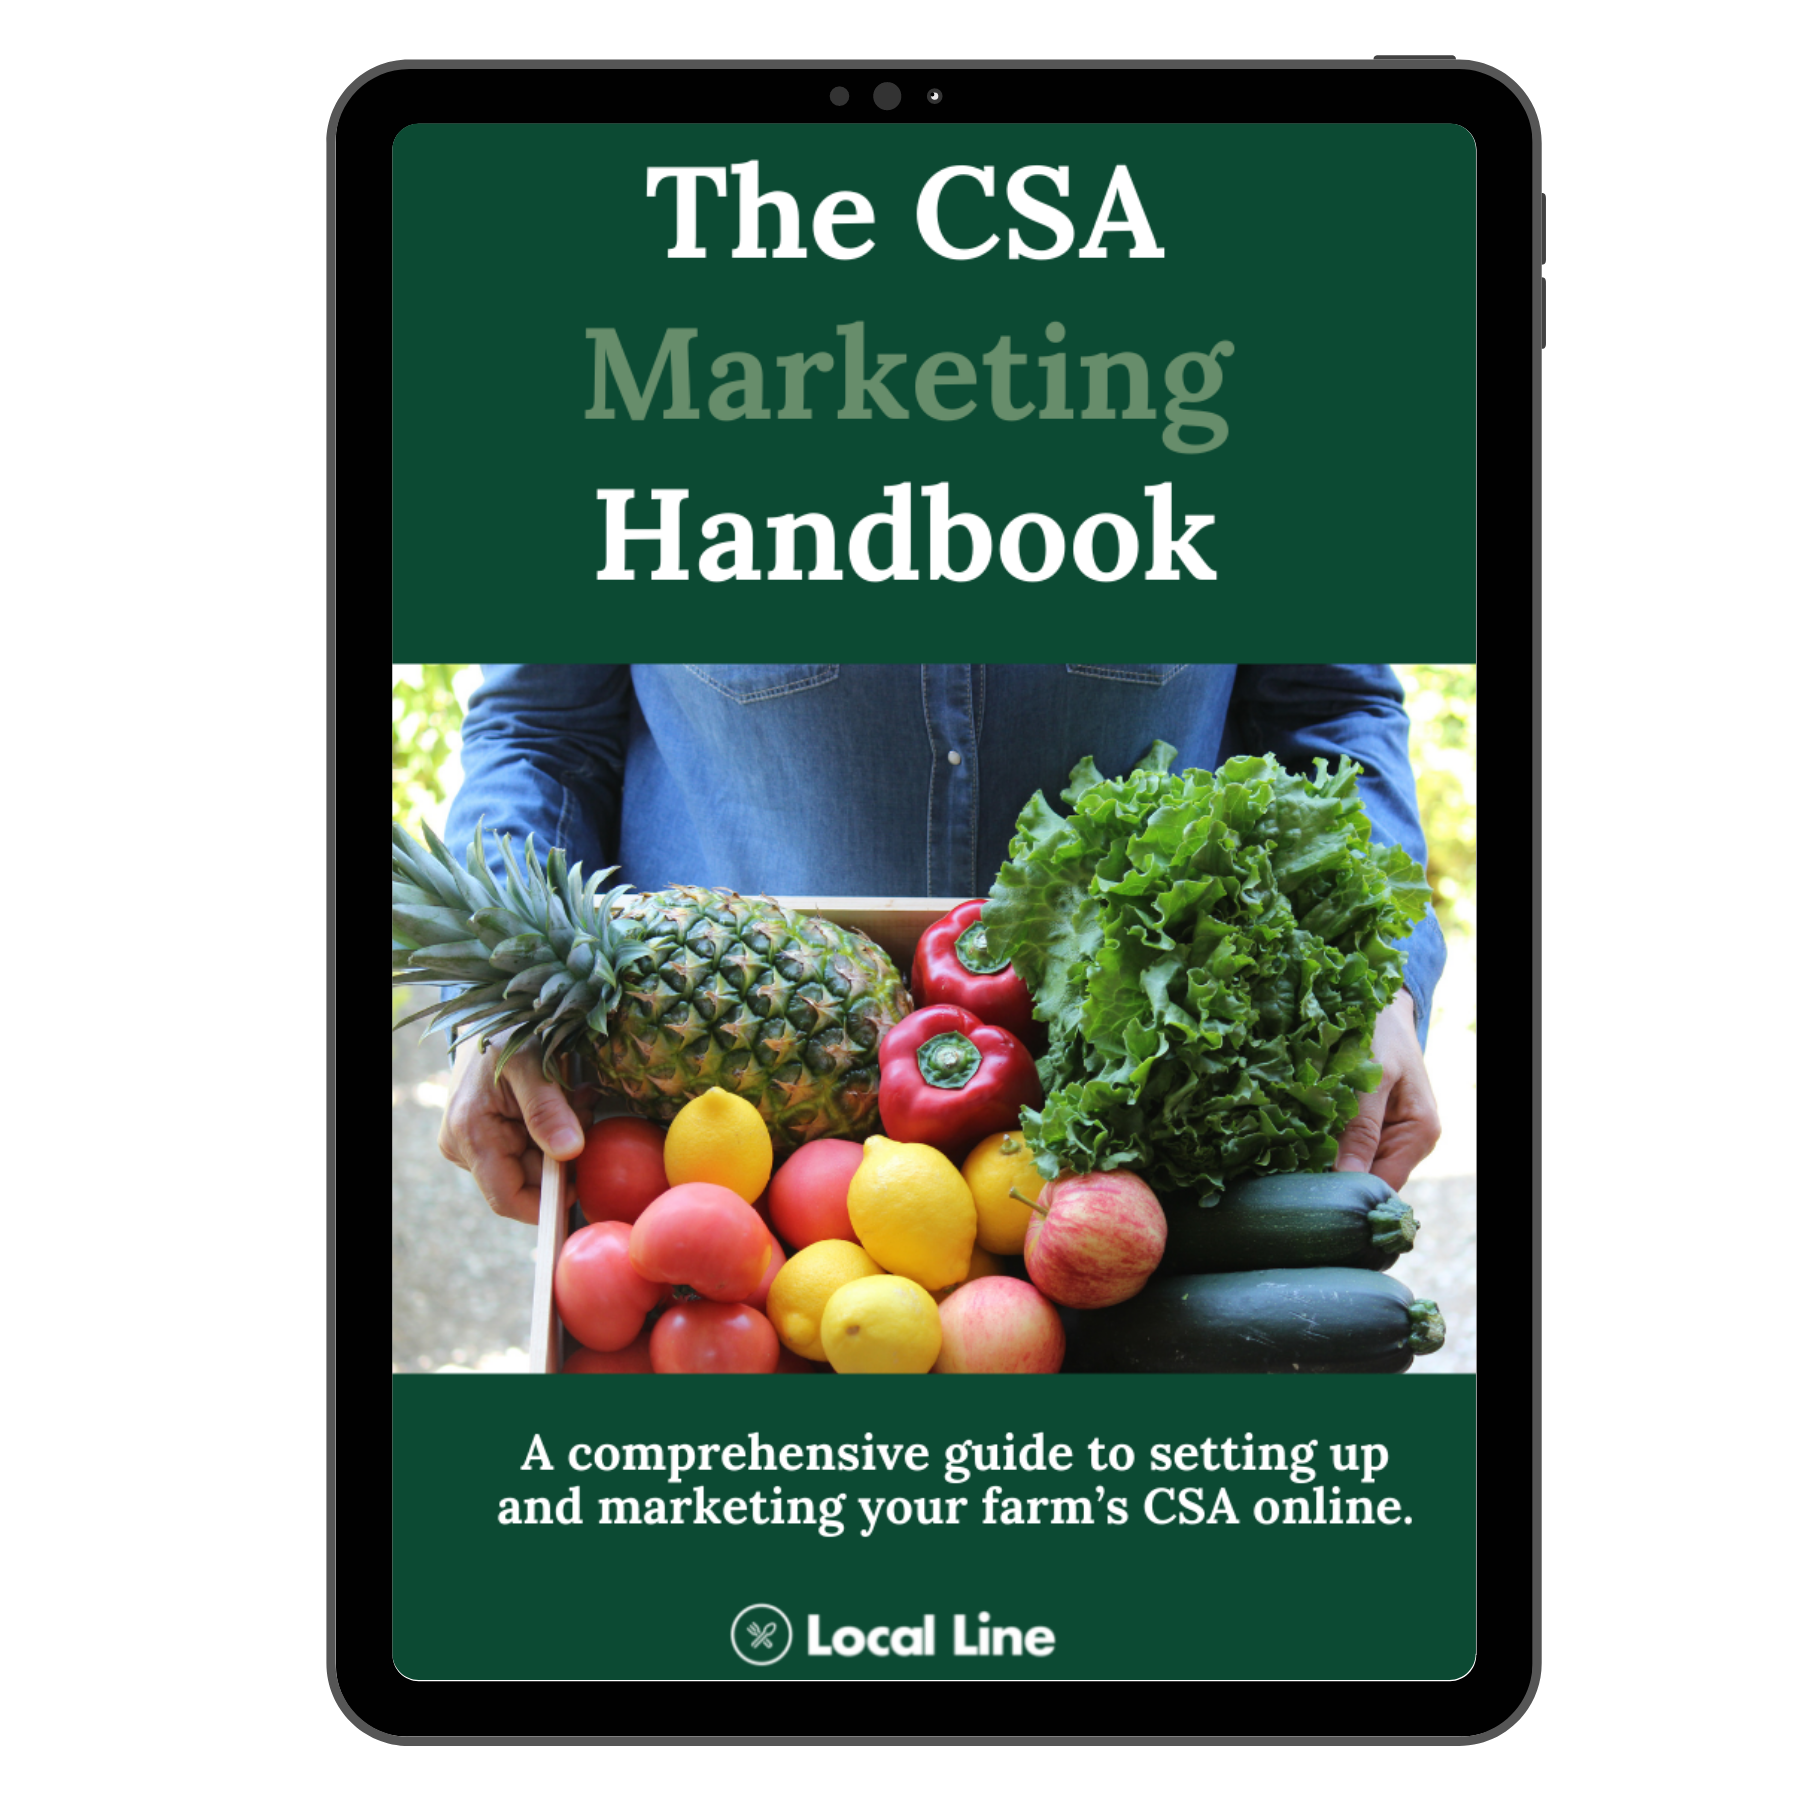 The CSA Marketing Handbook Guide